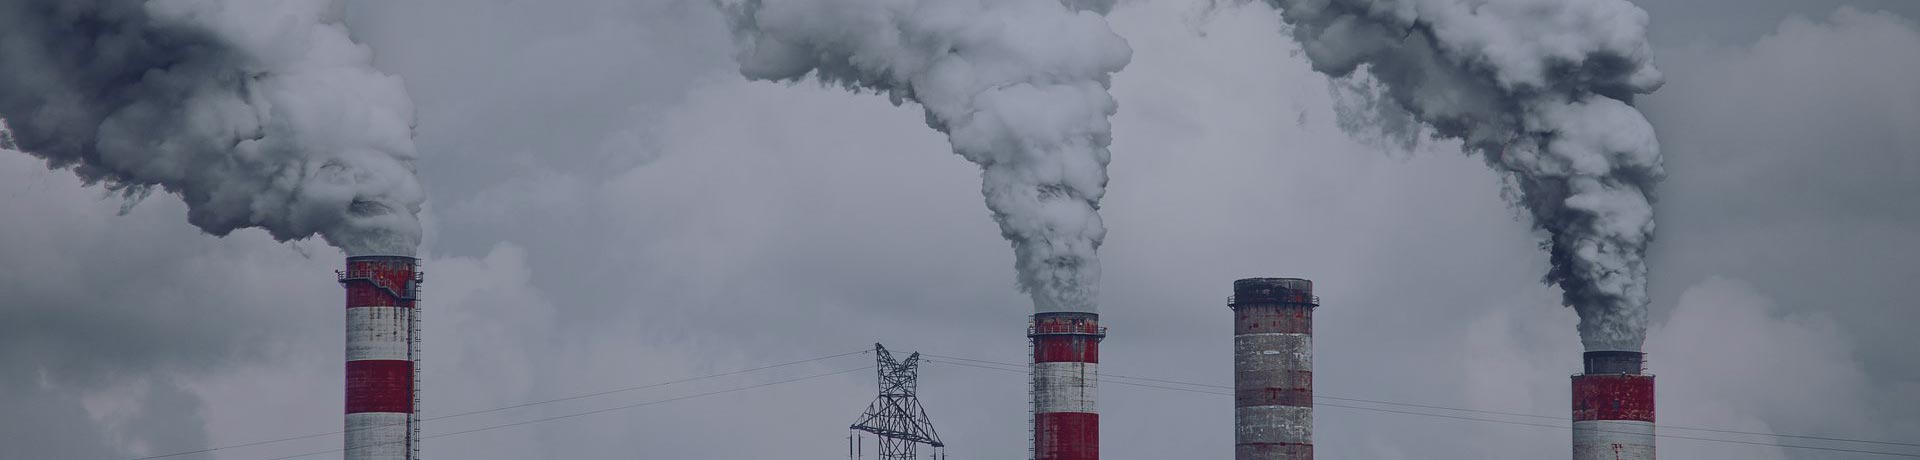 humo que sale de varias chimeneas de fábricas